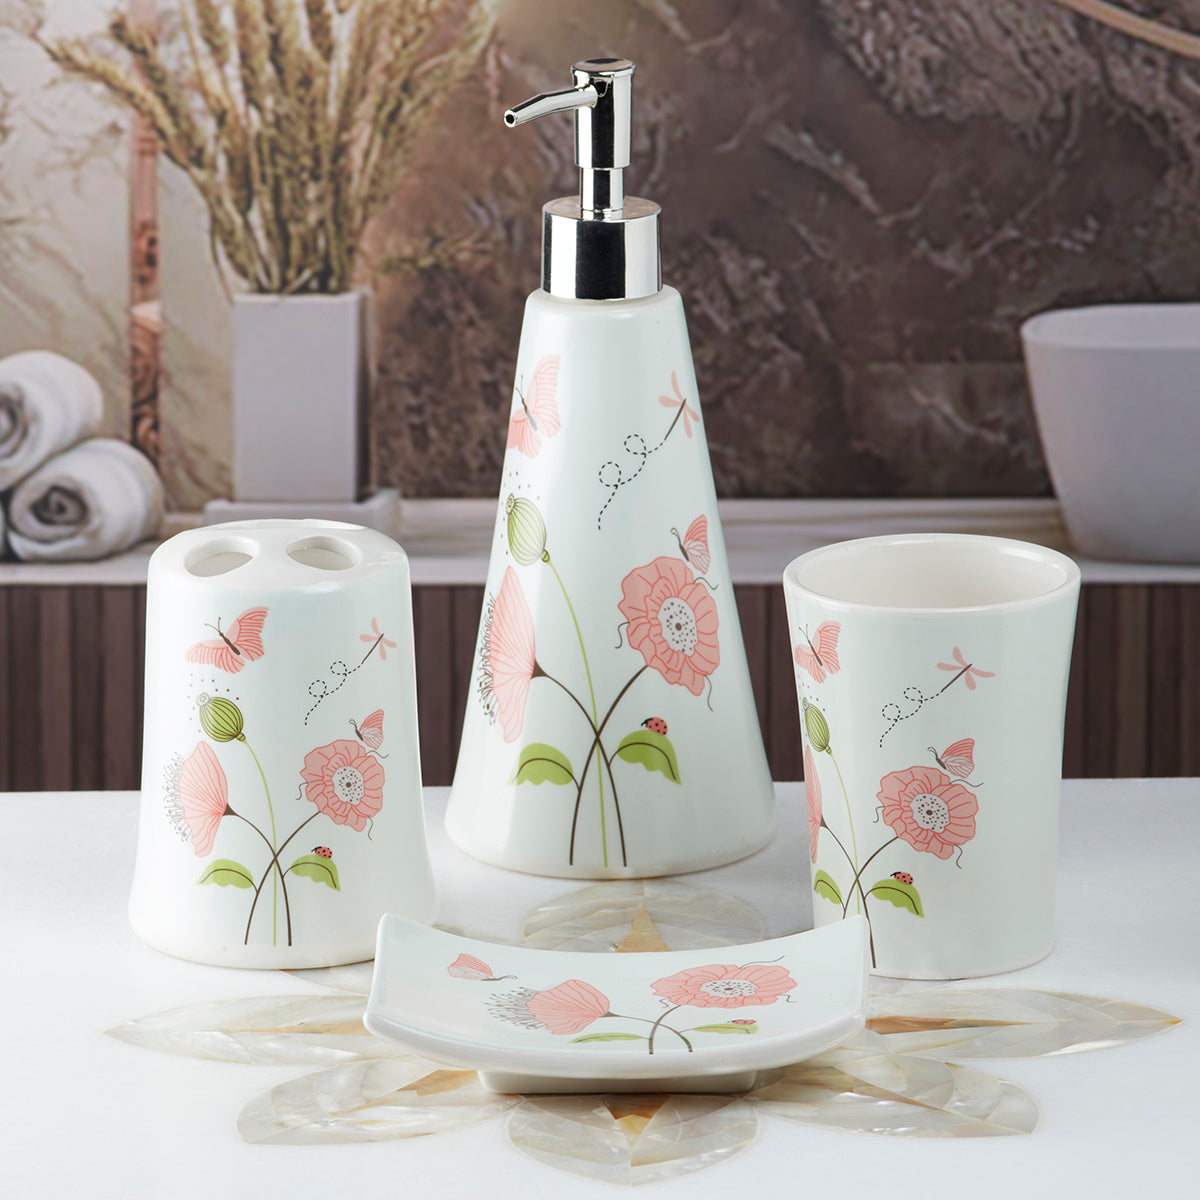 Ceramic Bathroom Accessories Set of 4 Bath Set with Soap Dispenser (8170)